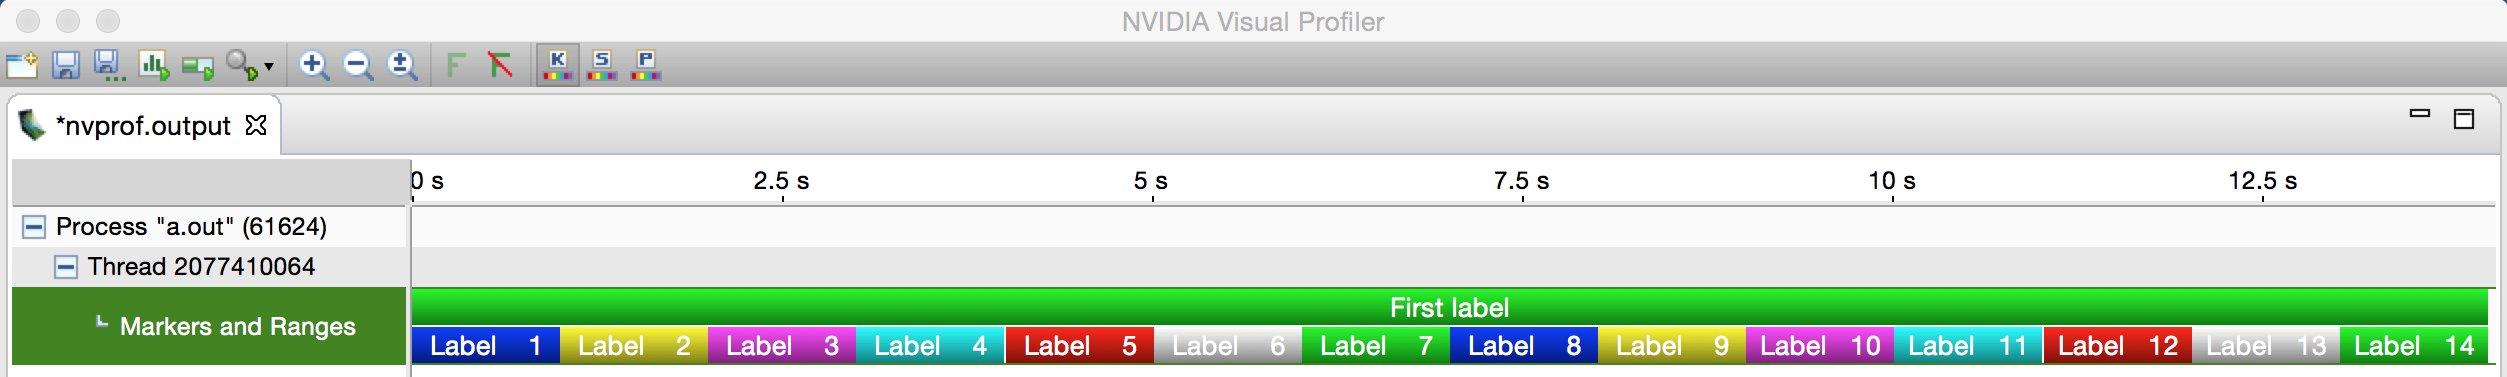 Figure 1: The NVIDIA Visual Profiler (NVVP) profile timeline showing custom ranges and labels inserted using NVTX.